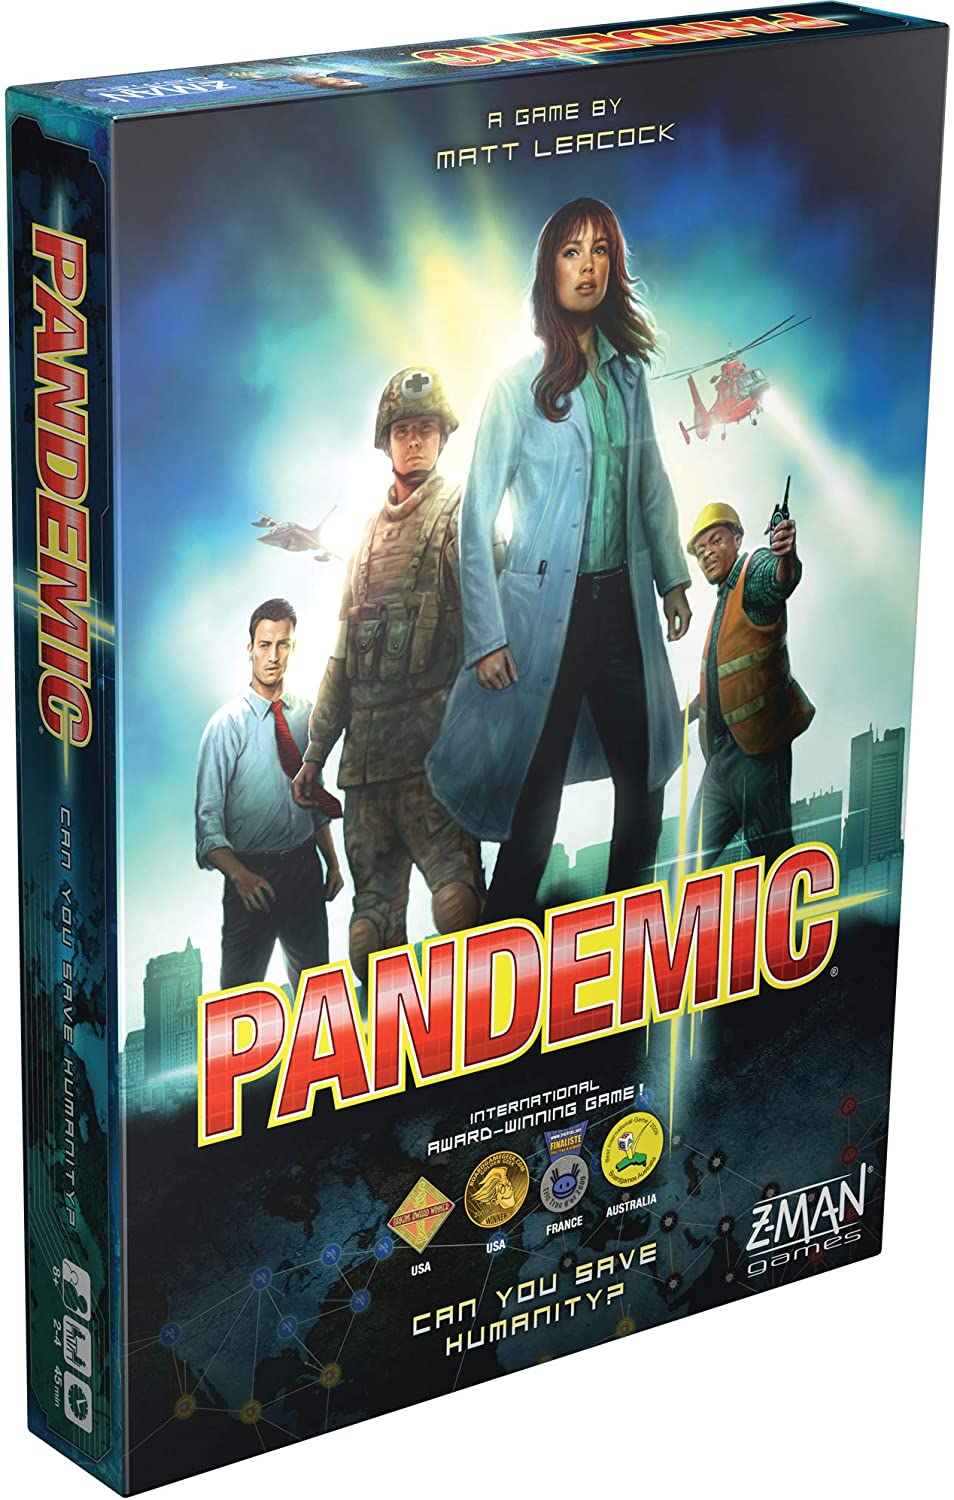 Strategy Board Games: 7 Wonders $29.99, Splendor $19.99, 7 Wonders Dual $14.49, Catan or Pandemic Board Games $15.49 & More via Amazon